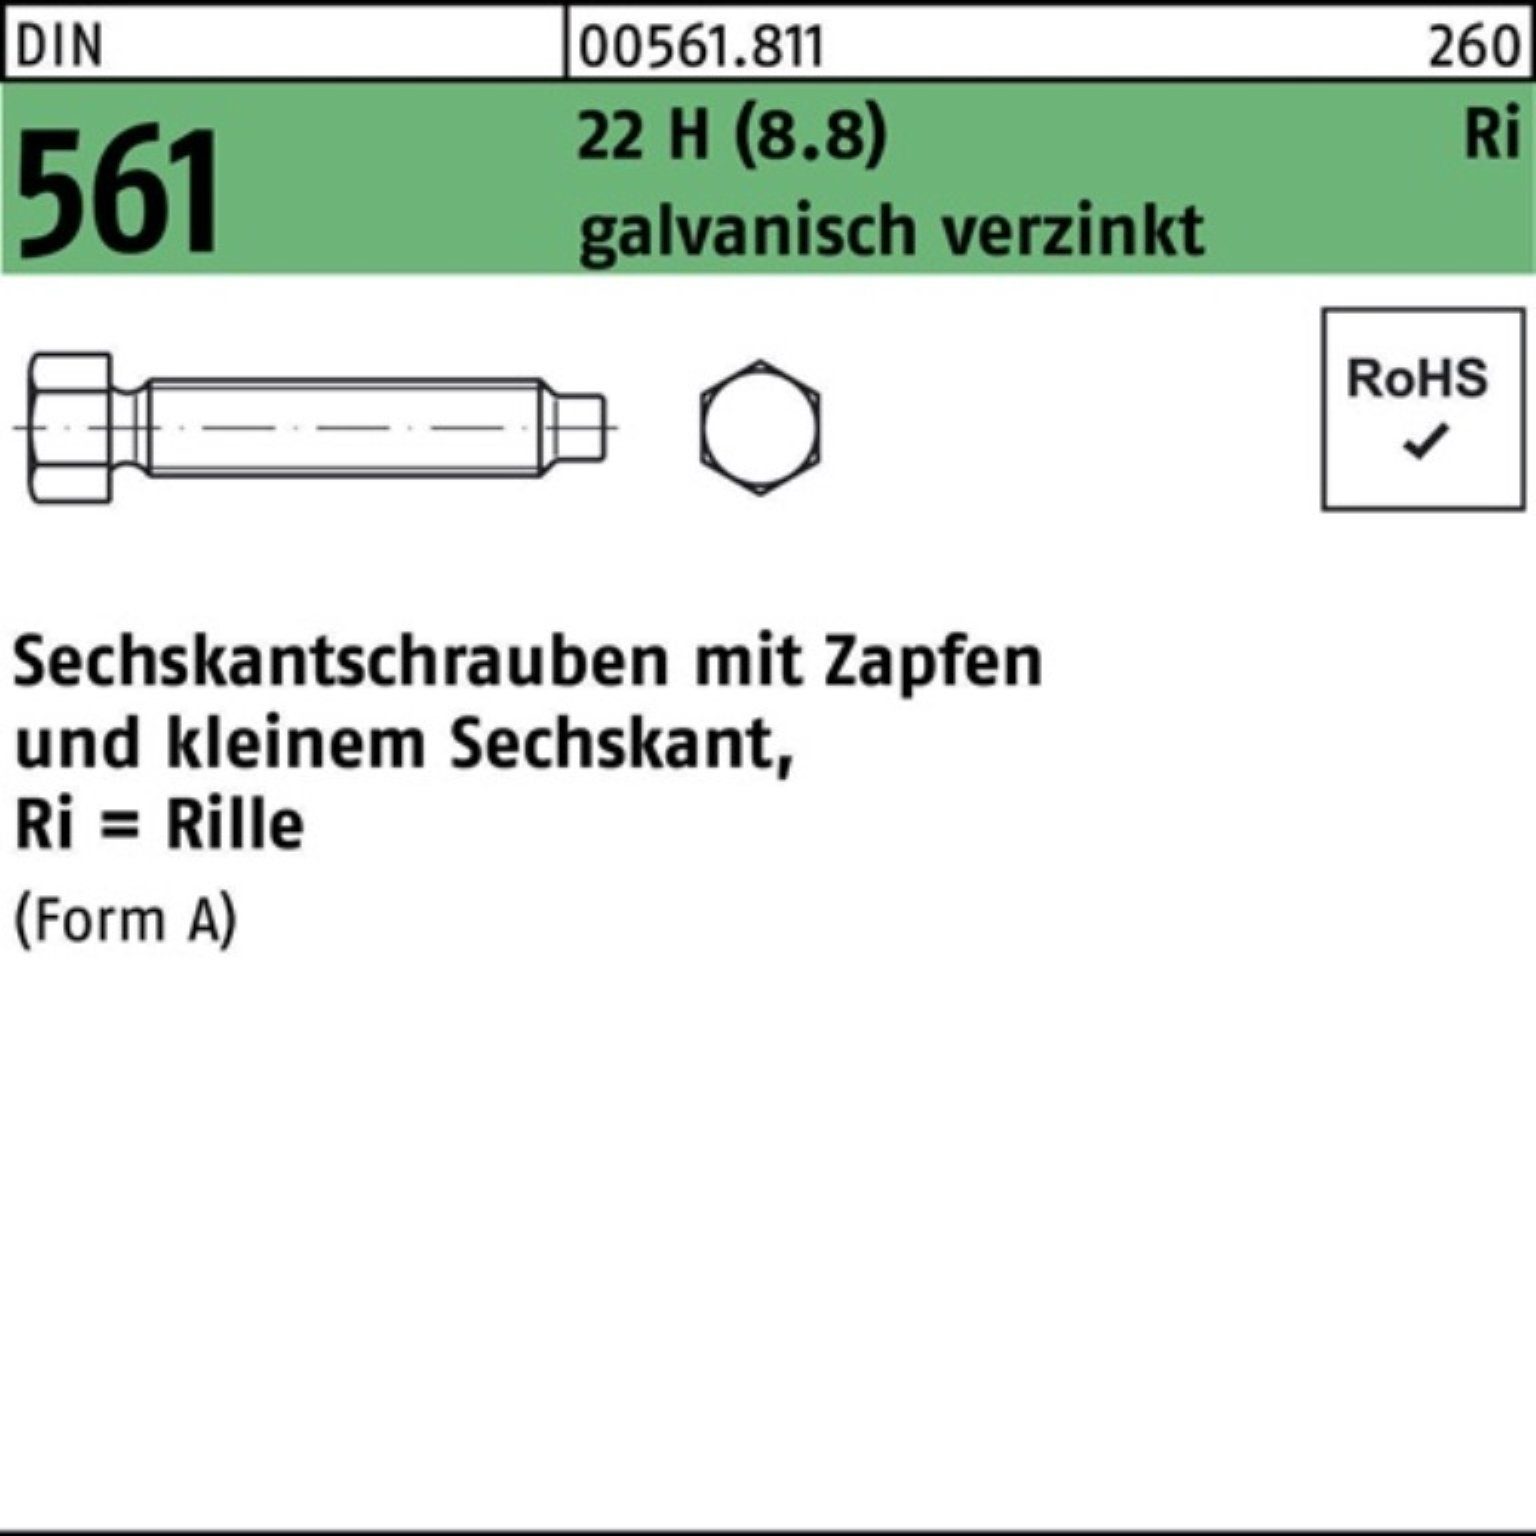 DIN Sechskantschraube (8.8) Reyher AM 8x45 561 Sechskantschraube 100er H 22 Zapfen galv.ve Pack